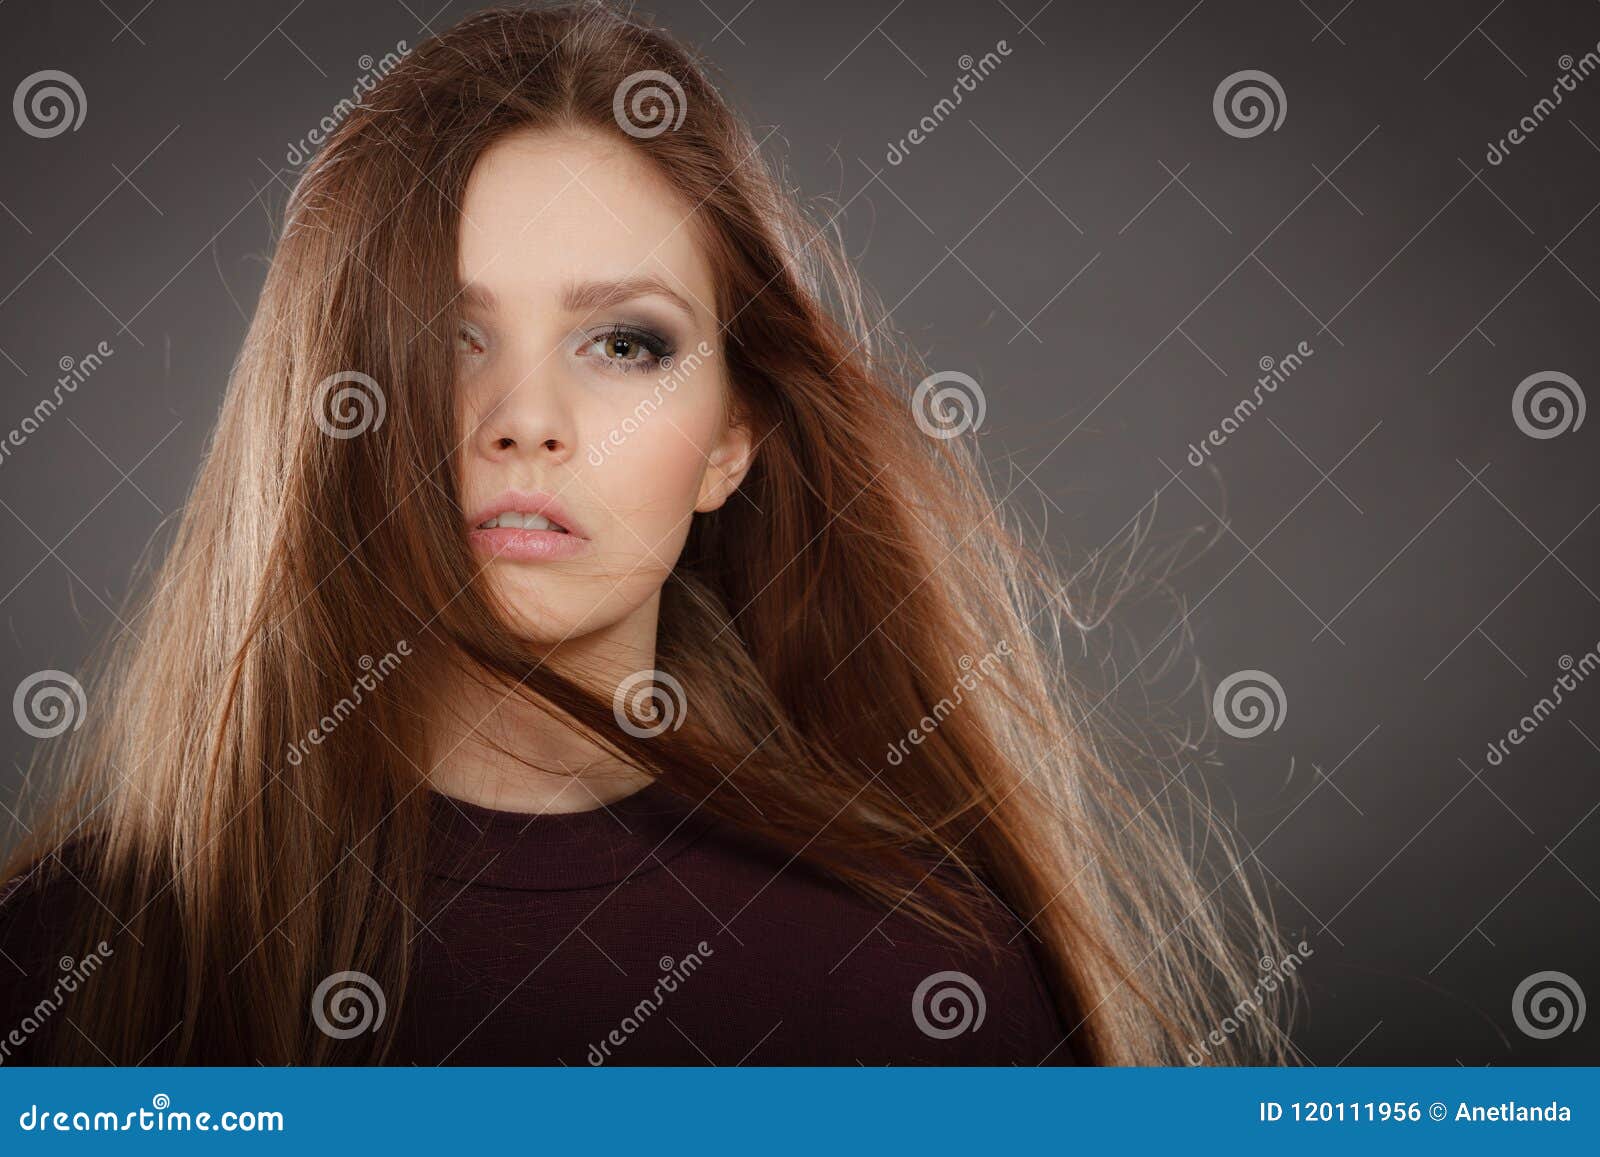 Glamorous Stunning Woman with Waving Hair. Stock Photo - Image of ...